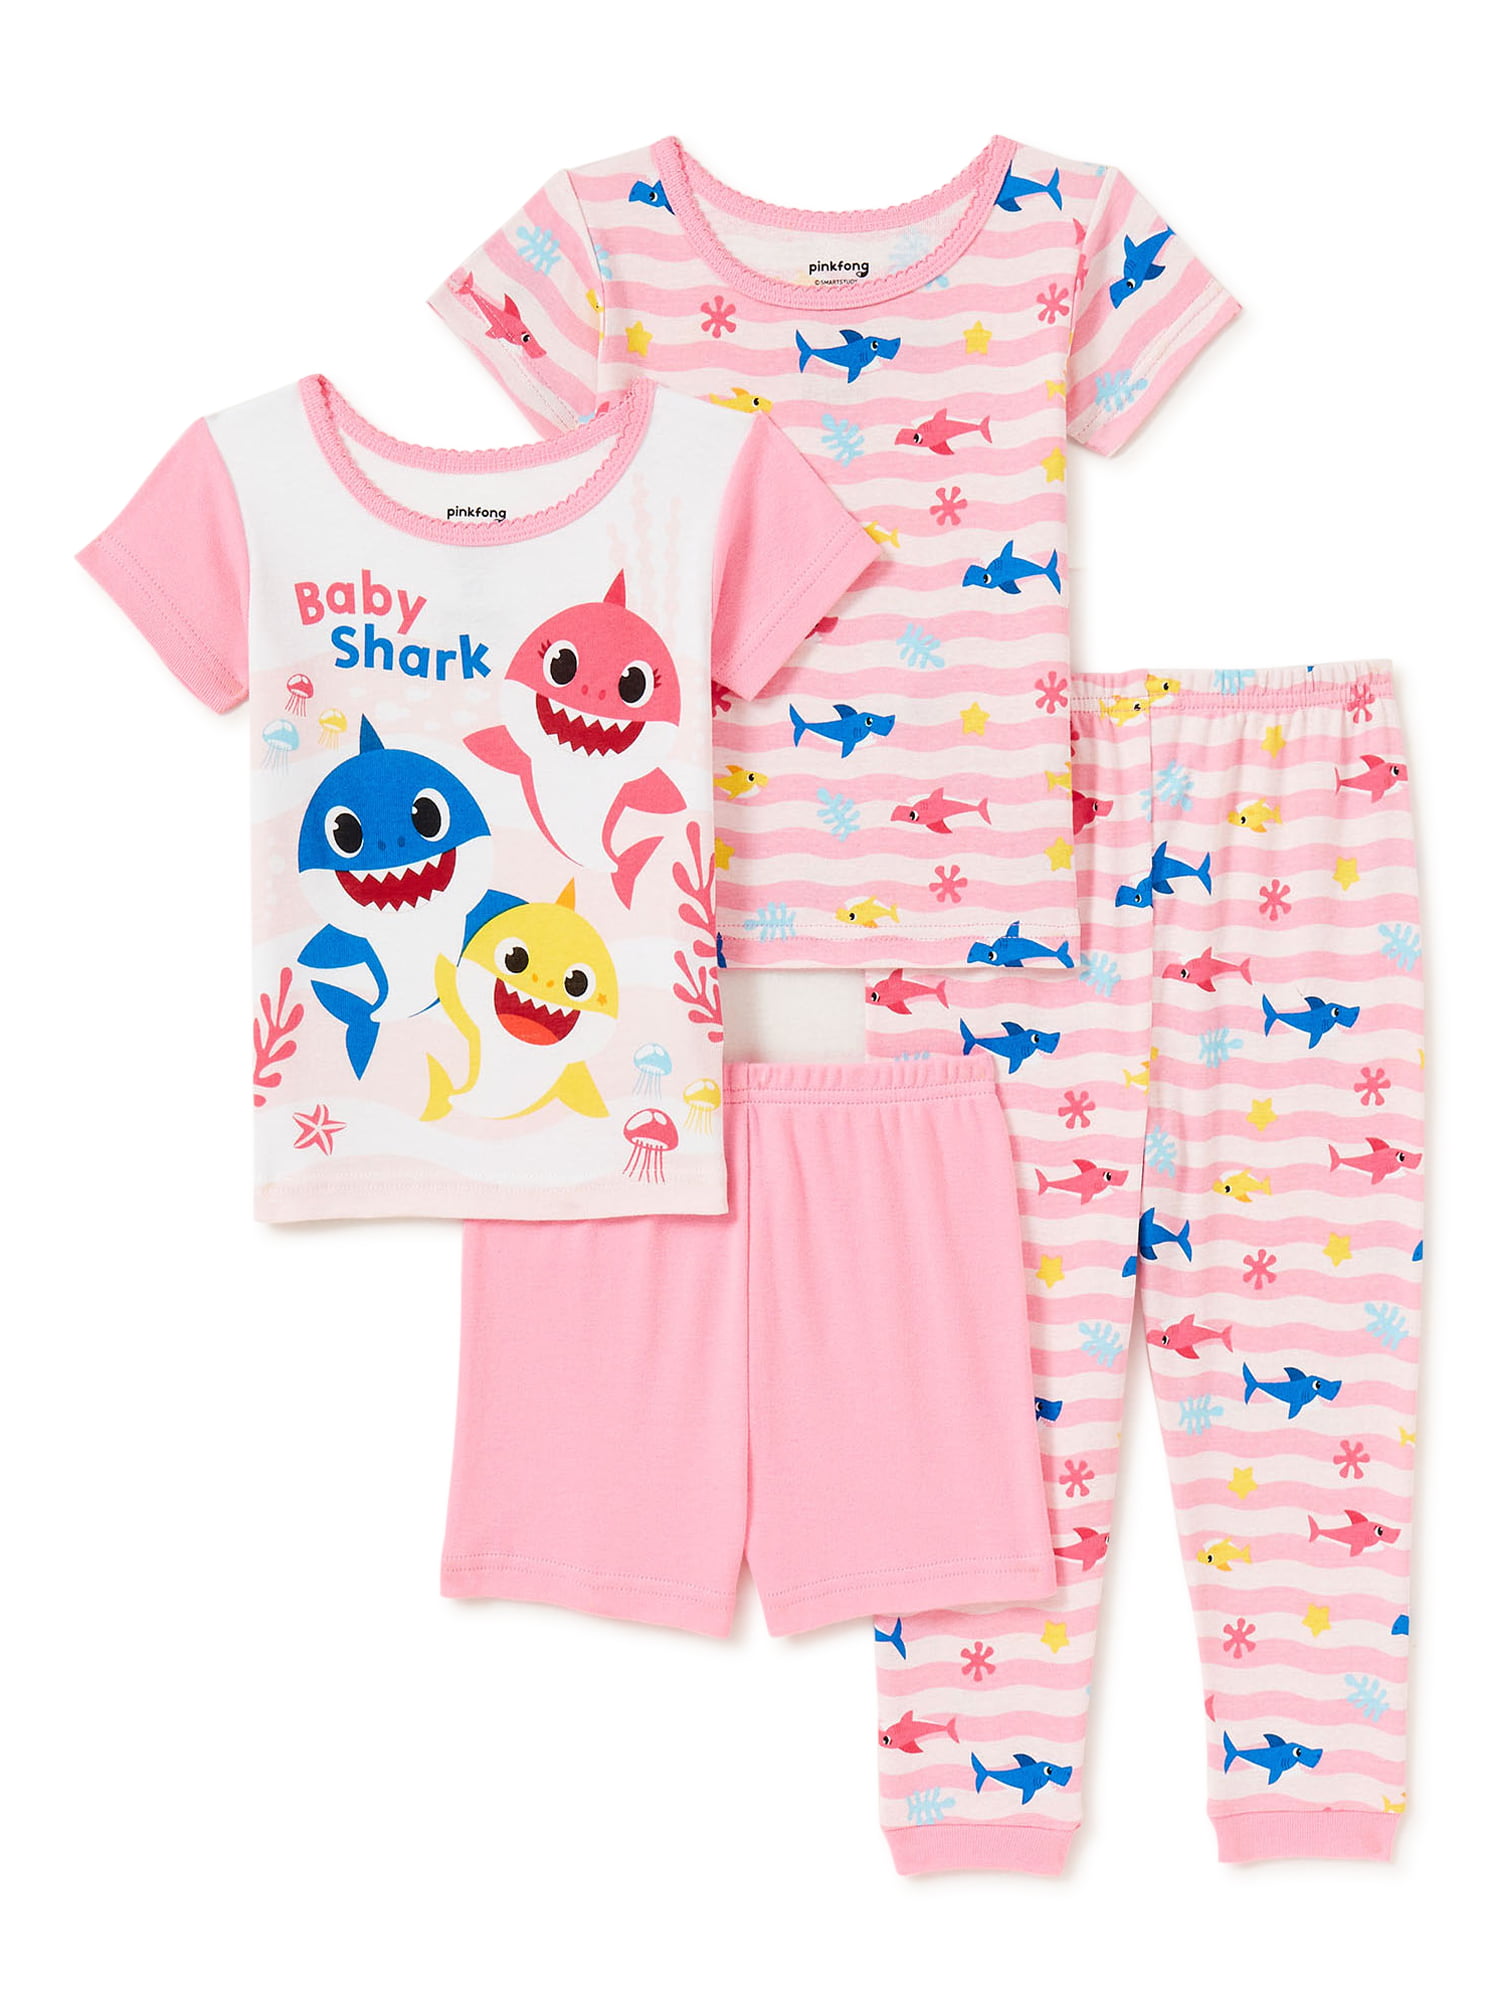 Aiwvia Toddler Girls Baby Shark Short Sleeve Nightgown Sleepwear Nightie Princess Casual Dresses 18M-6Y 